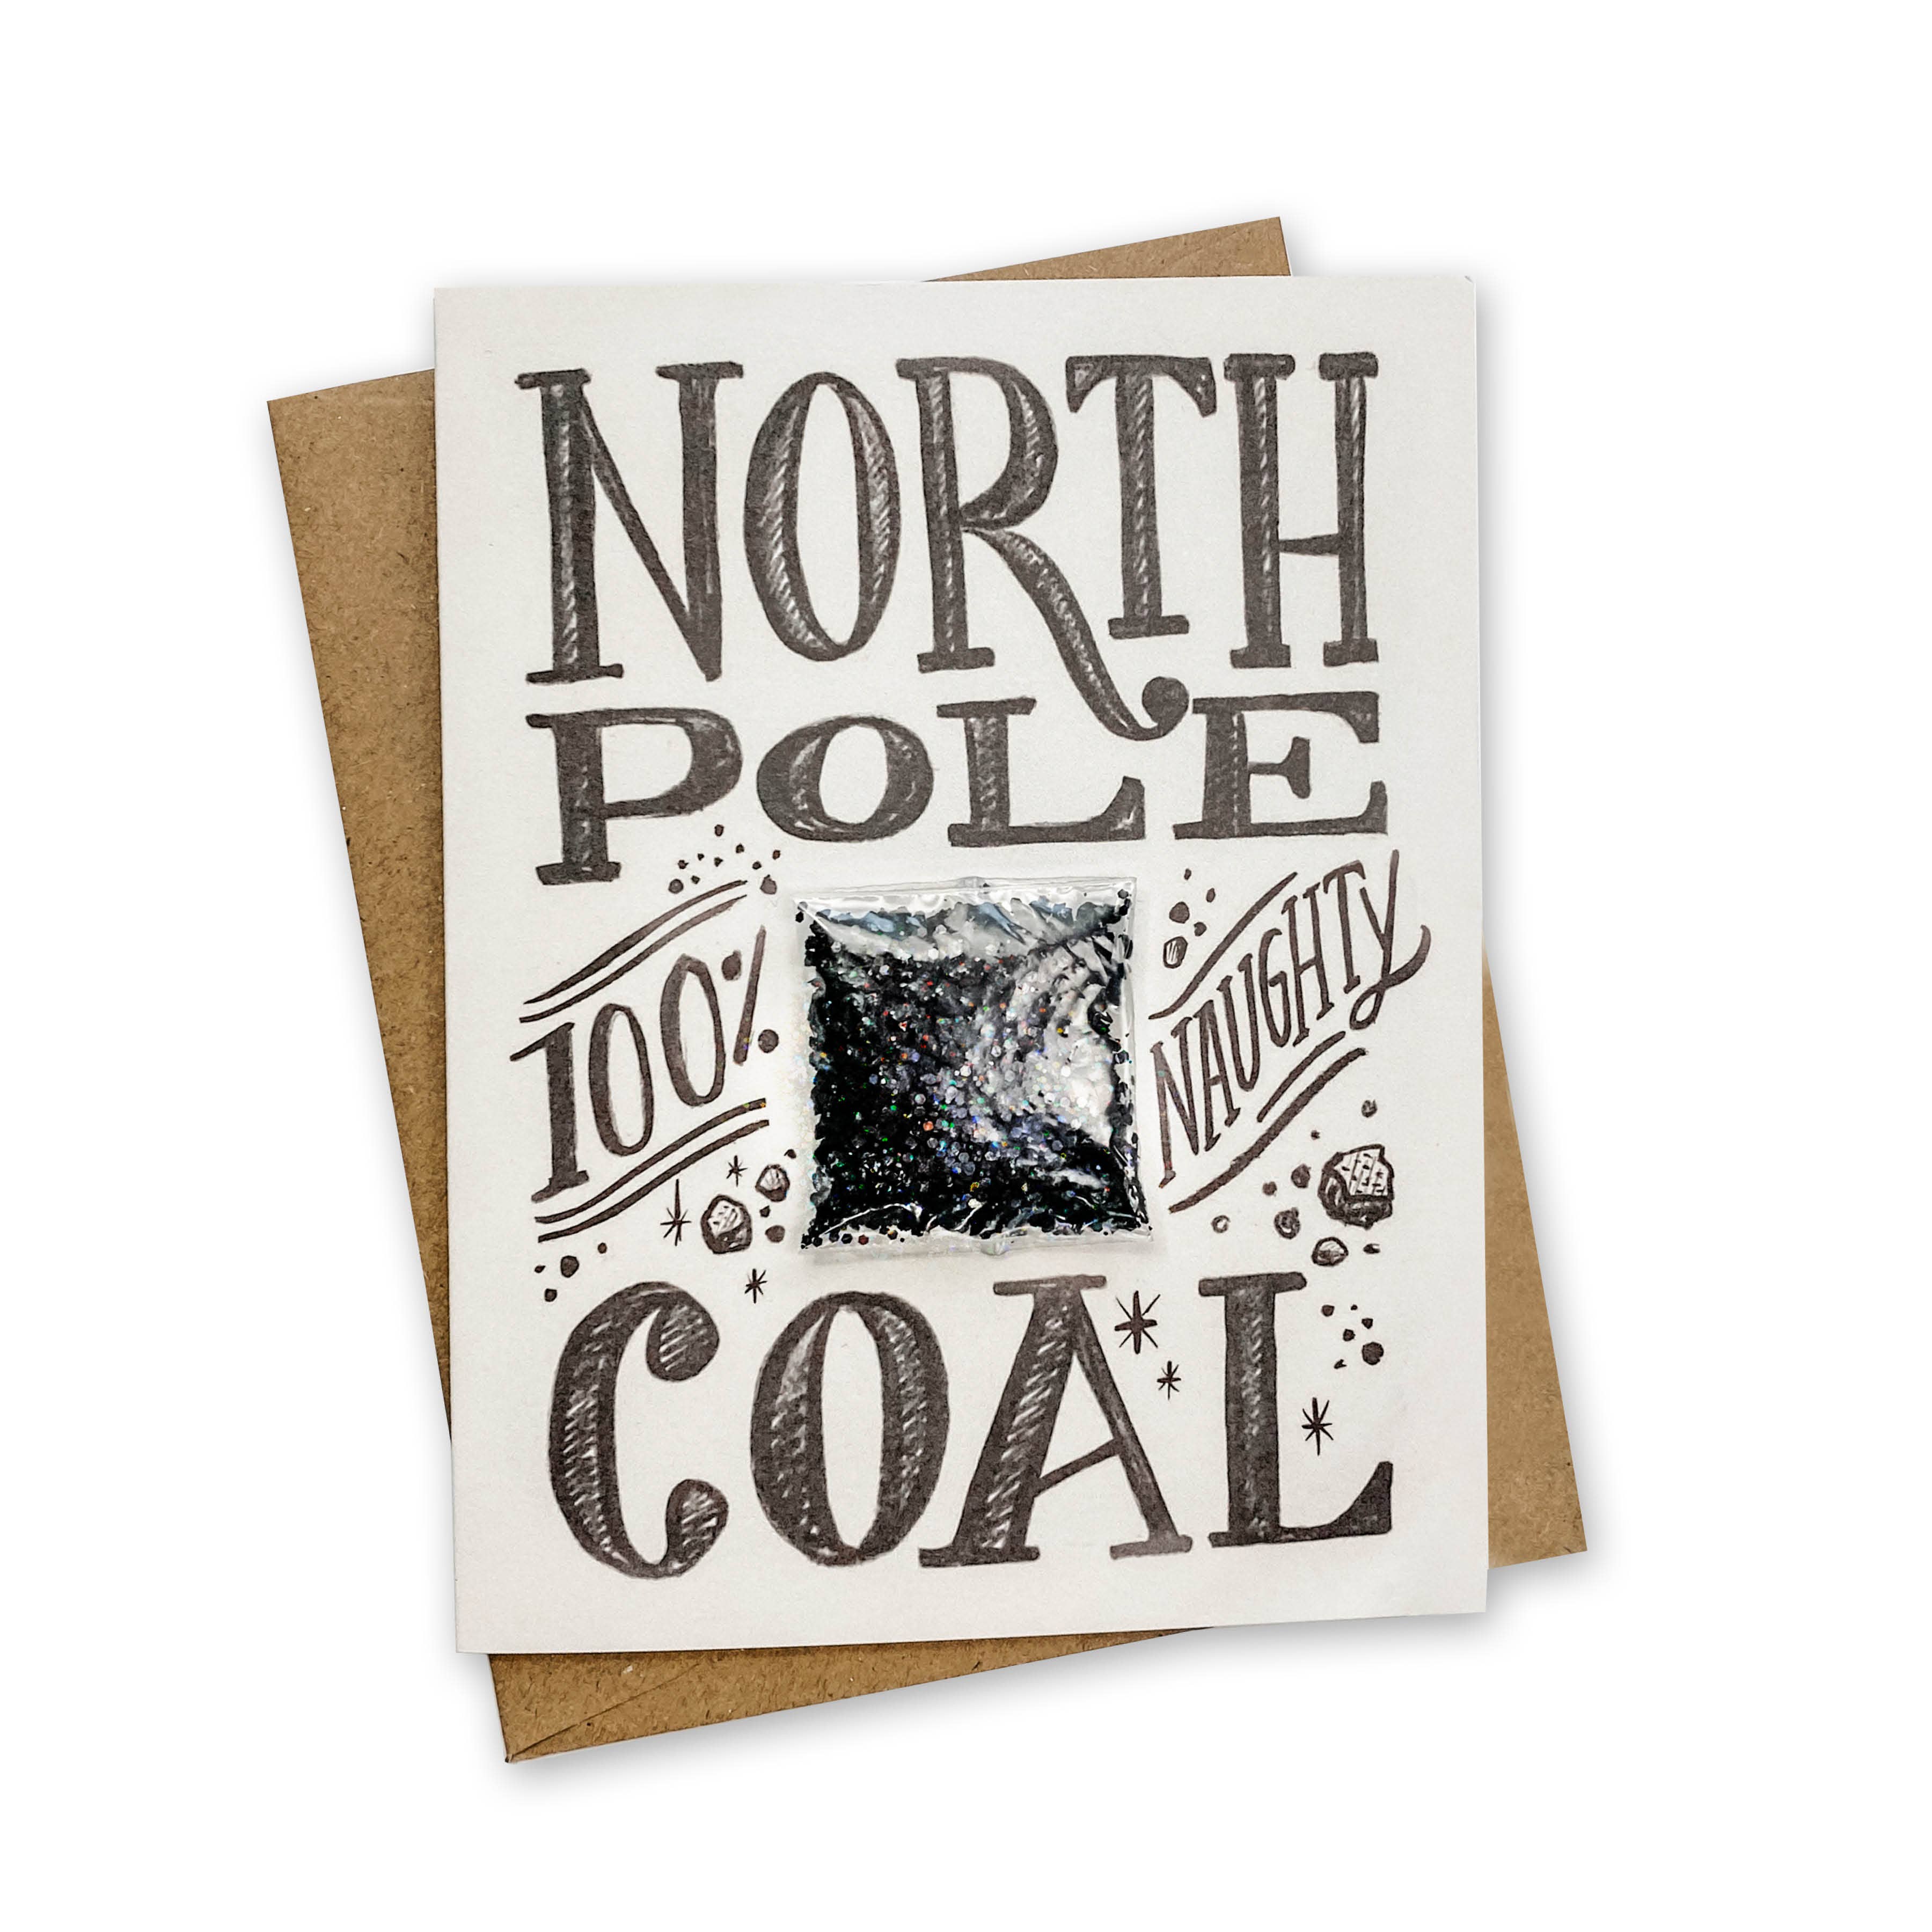 North Pole Coal Holiday Card